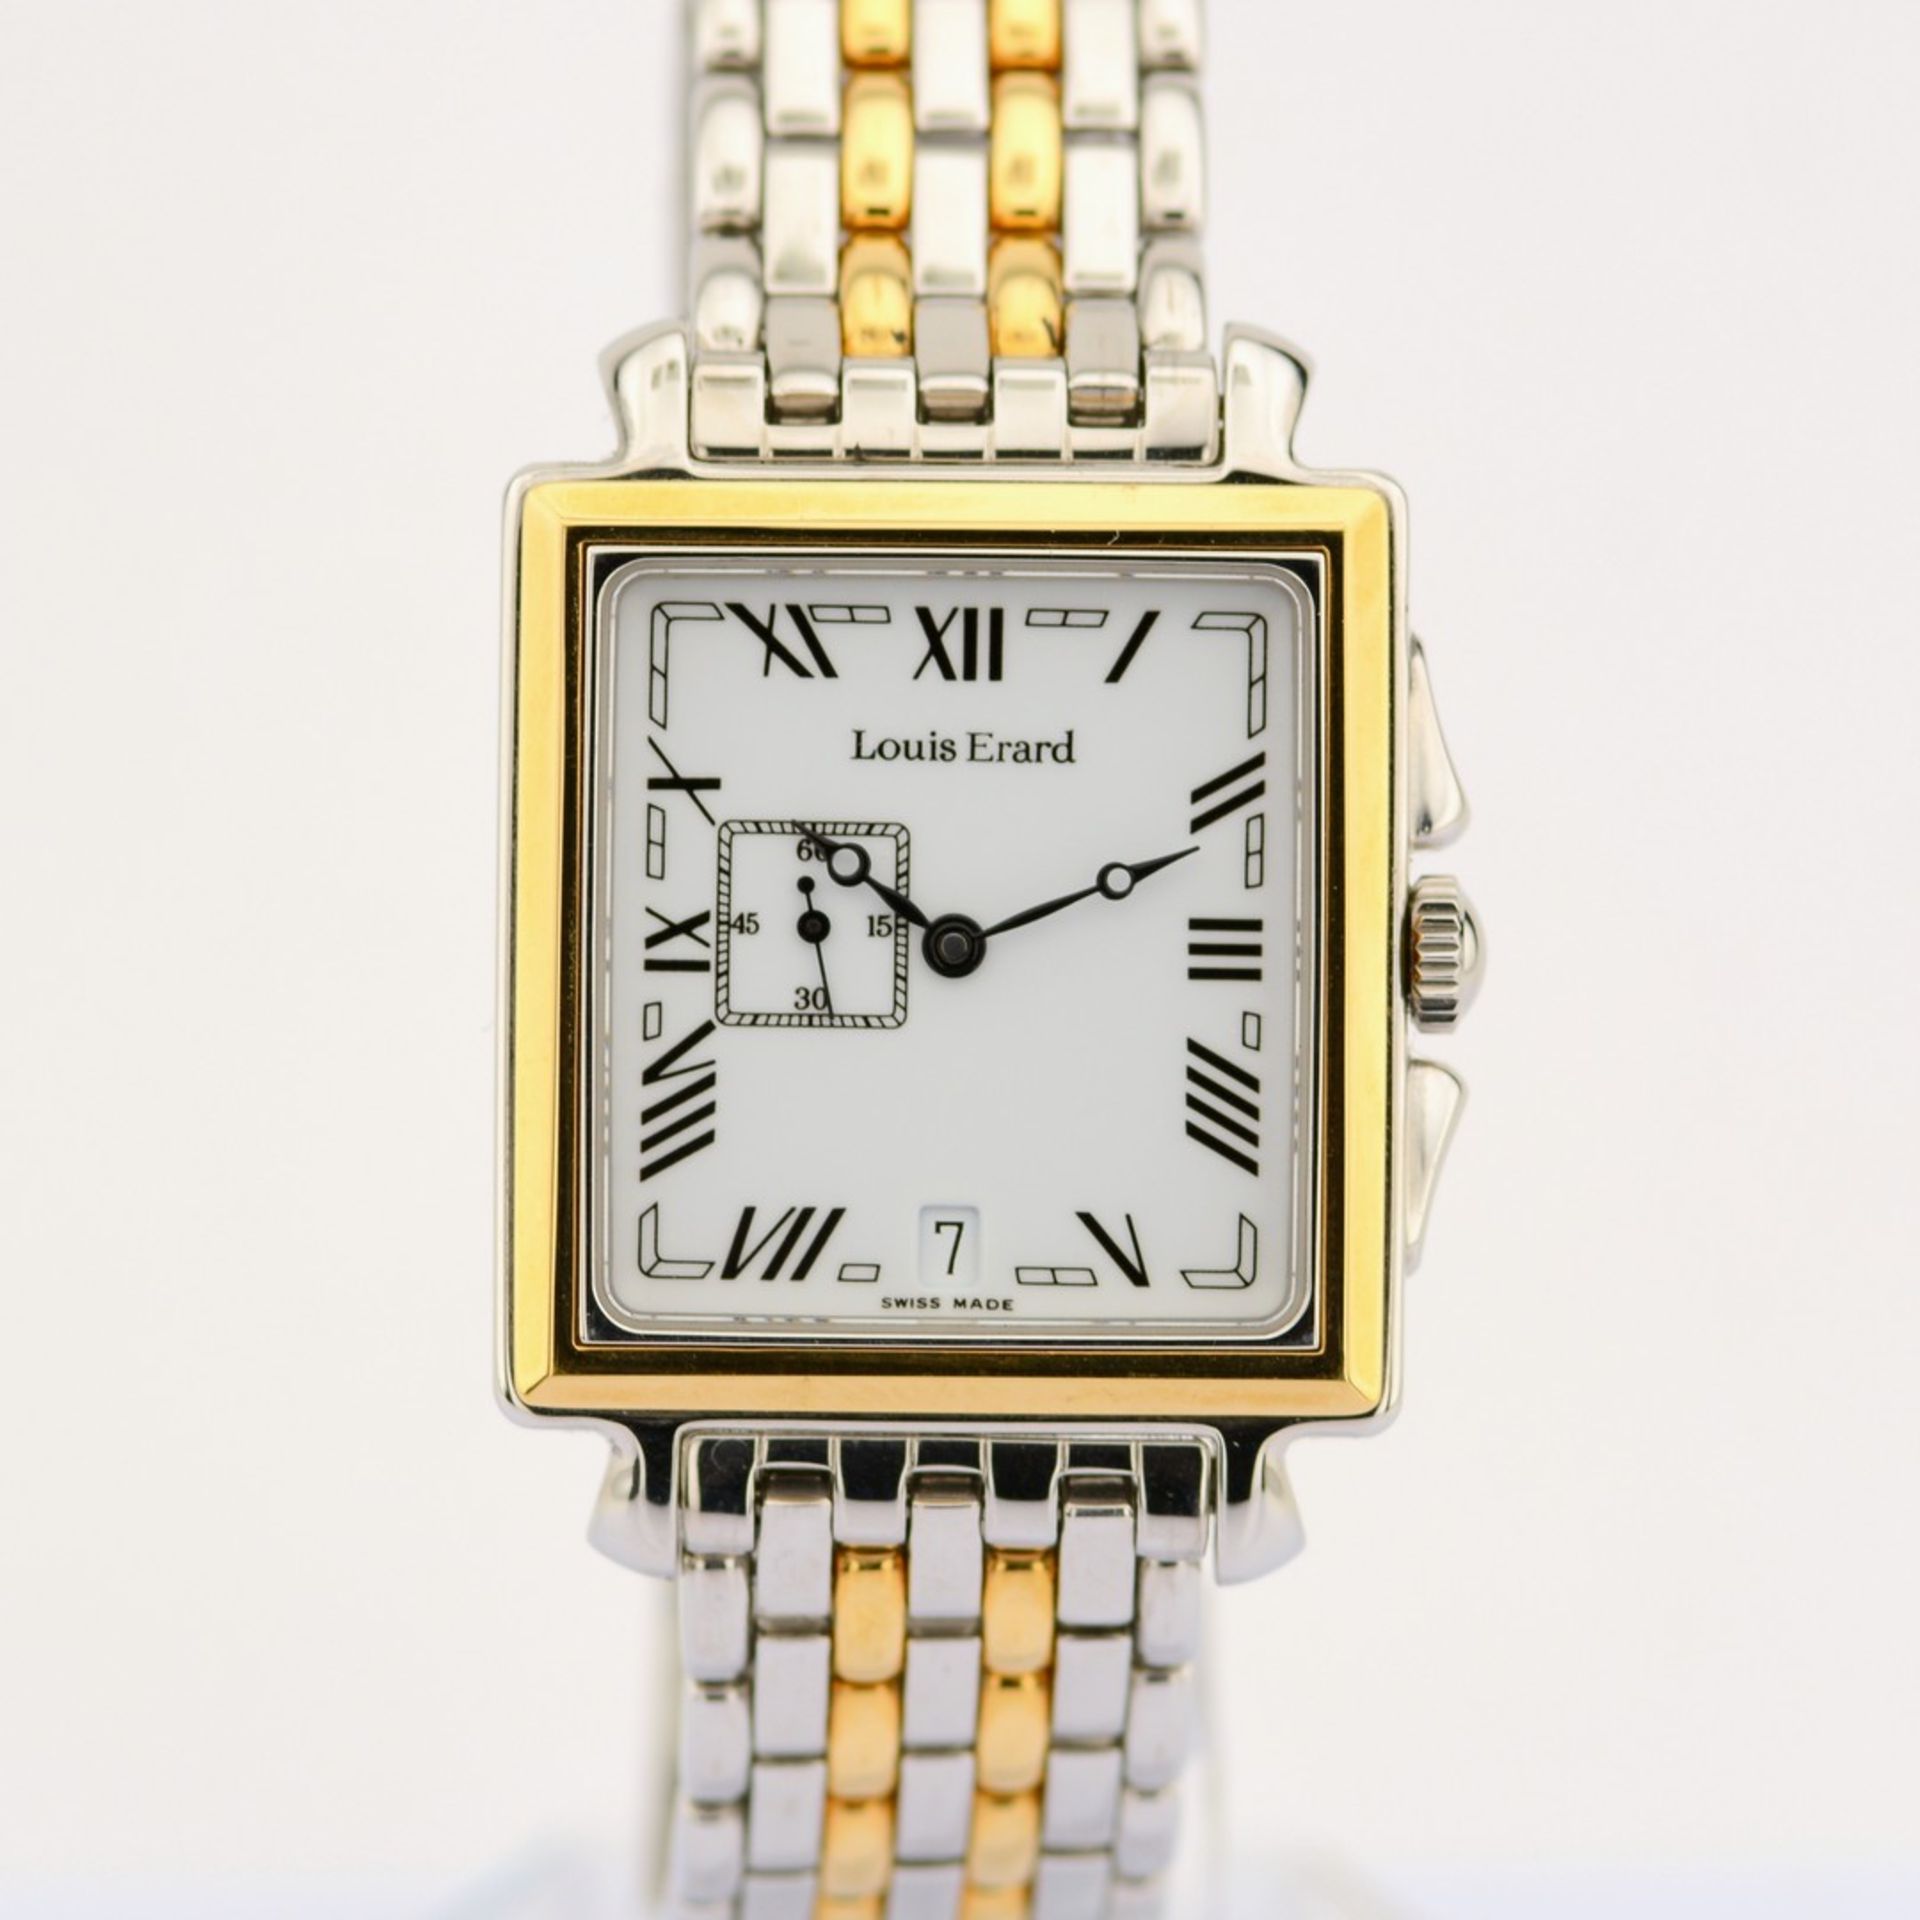 Louis Erard / Automatic Date - Gentlemen's Steel Wristwatch - Image 3 of 8